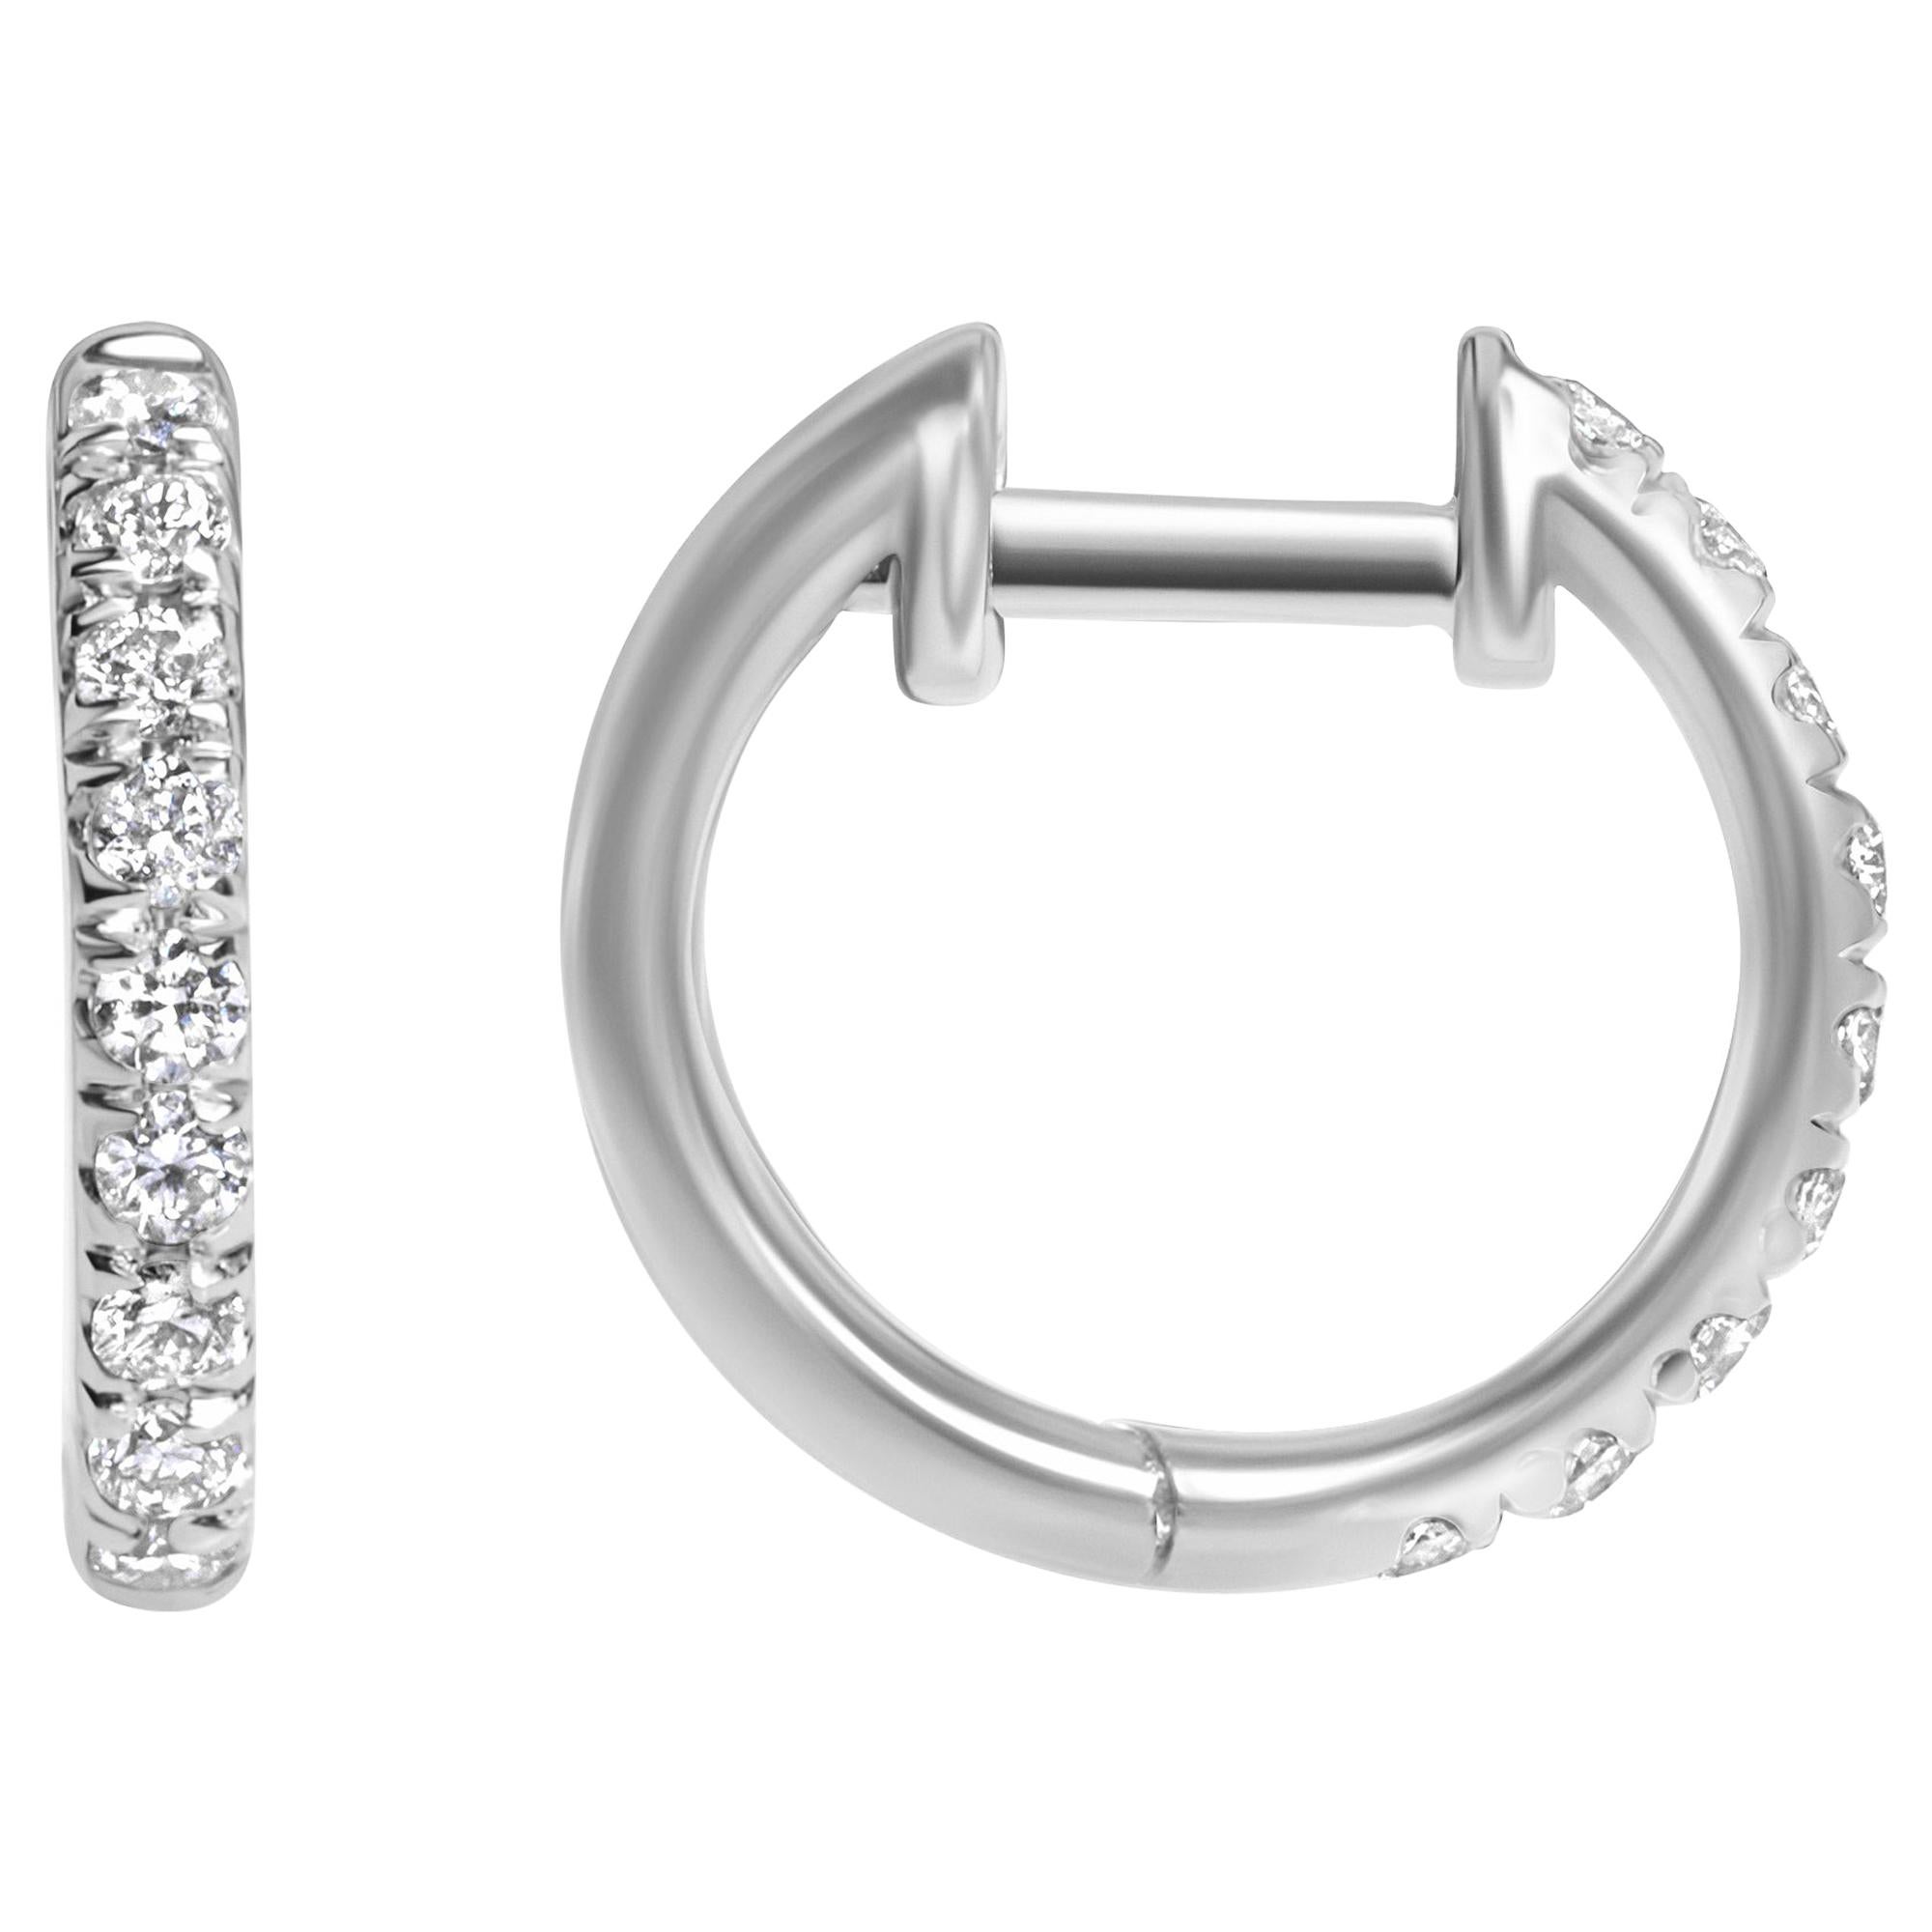 0.27 Carat Lori Diamond Hoop Earrings in 14 Karat White Gold - Shlomit Rogel